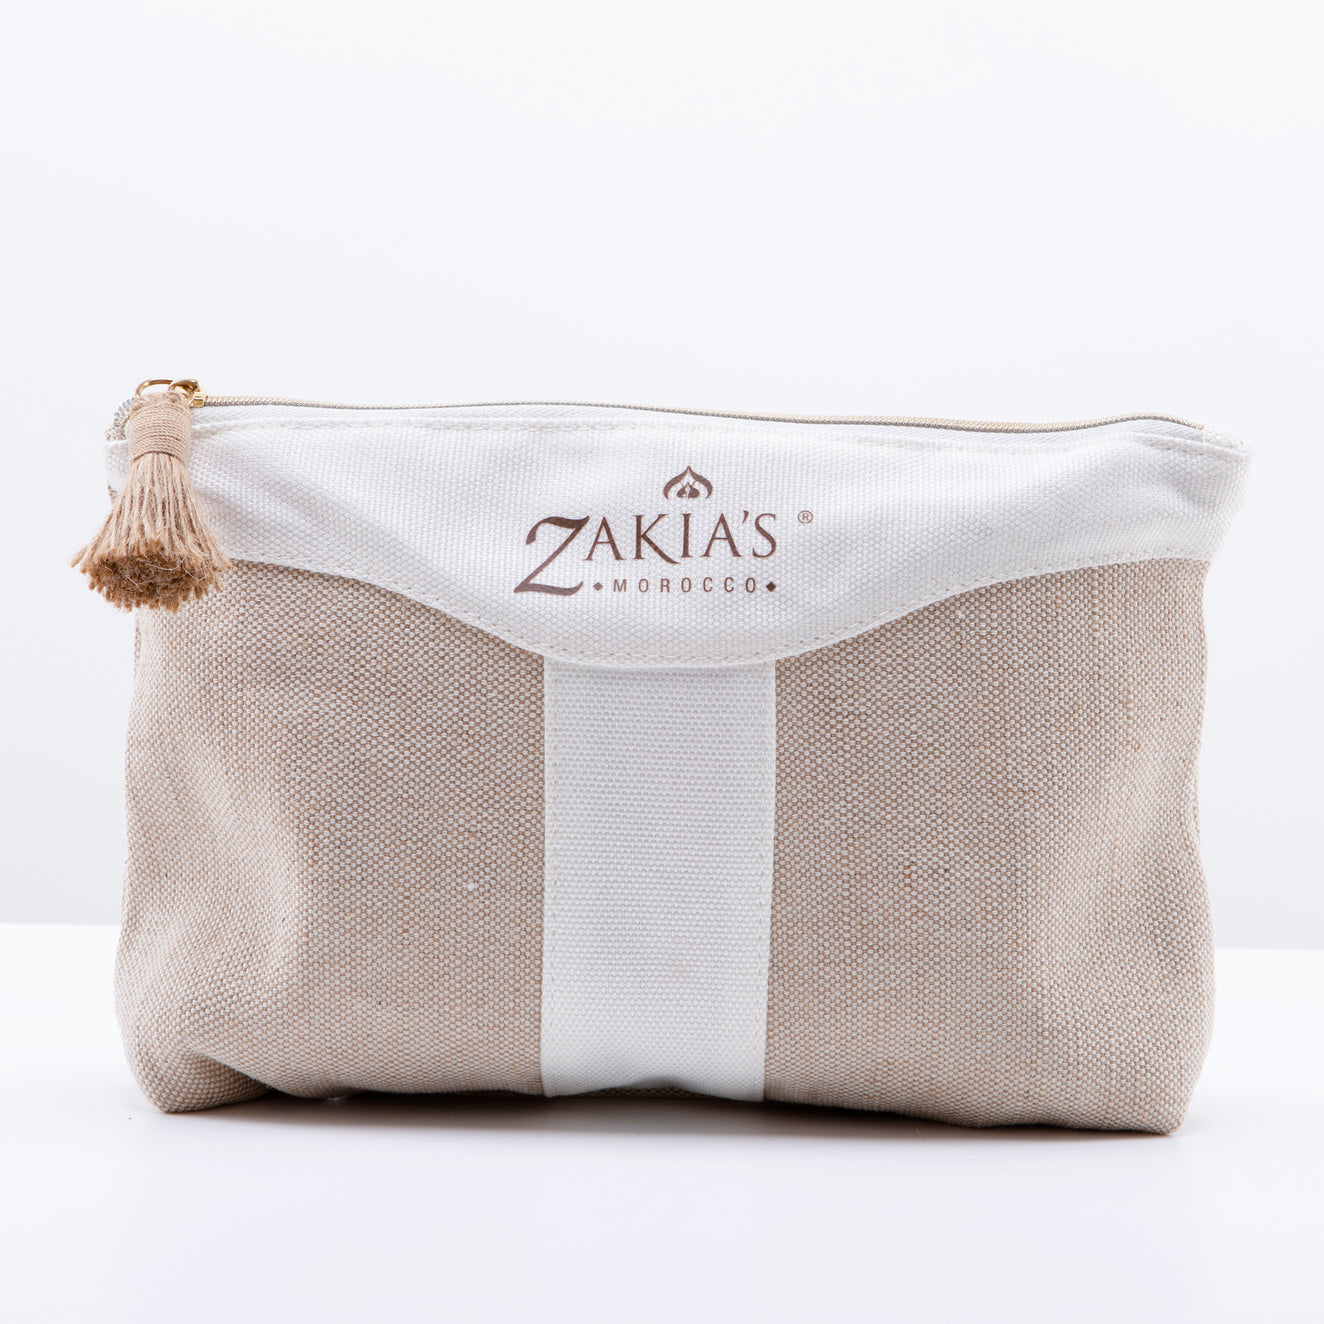 Zakia's Morocco Hammam Jute Cosmetic Bag